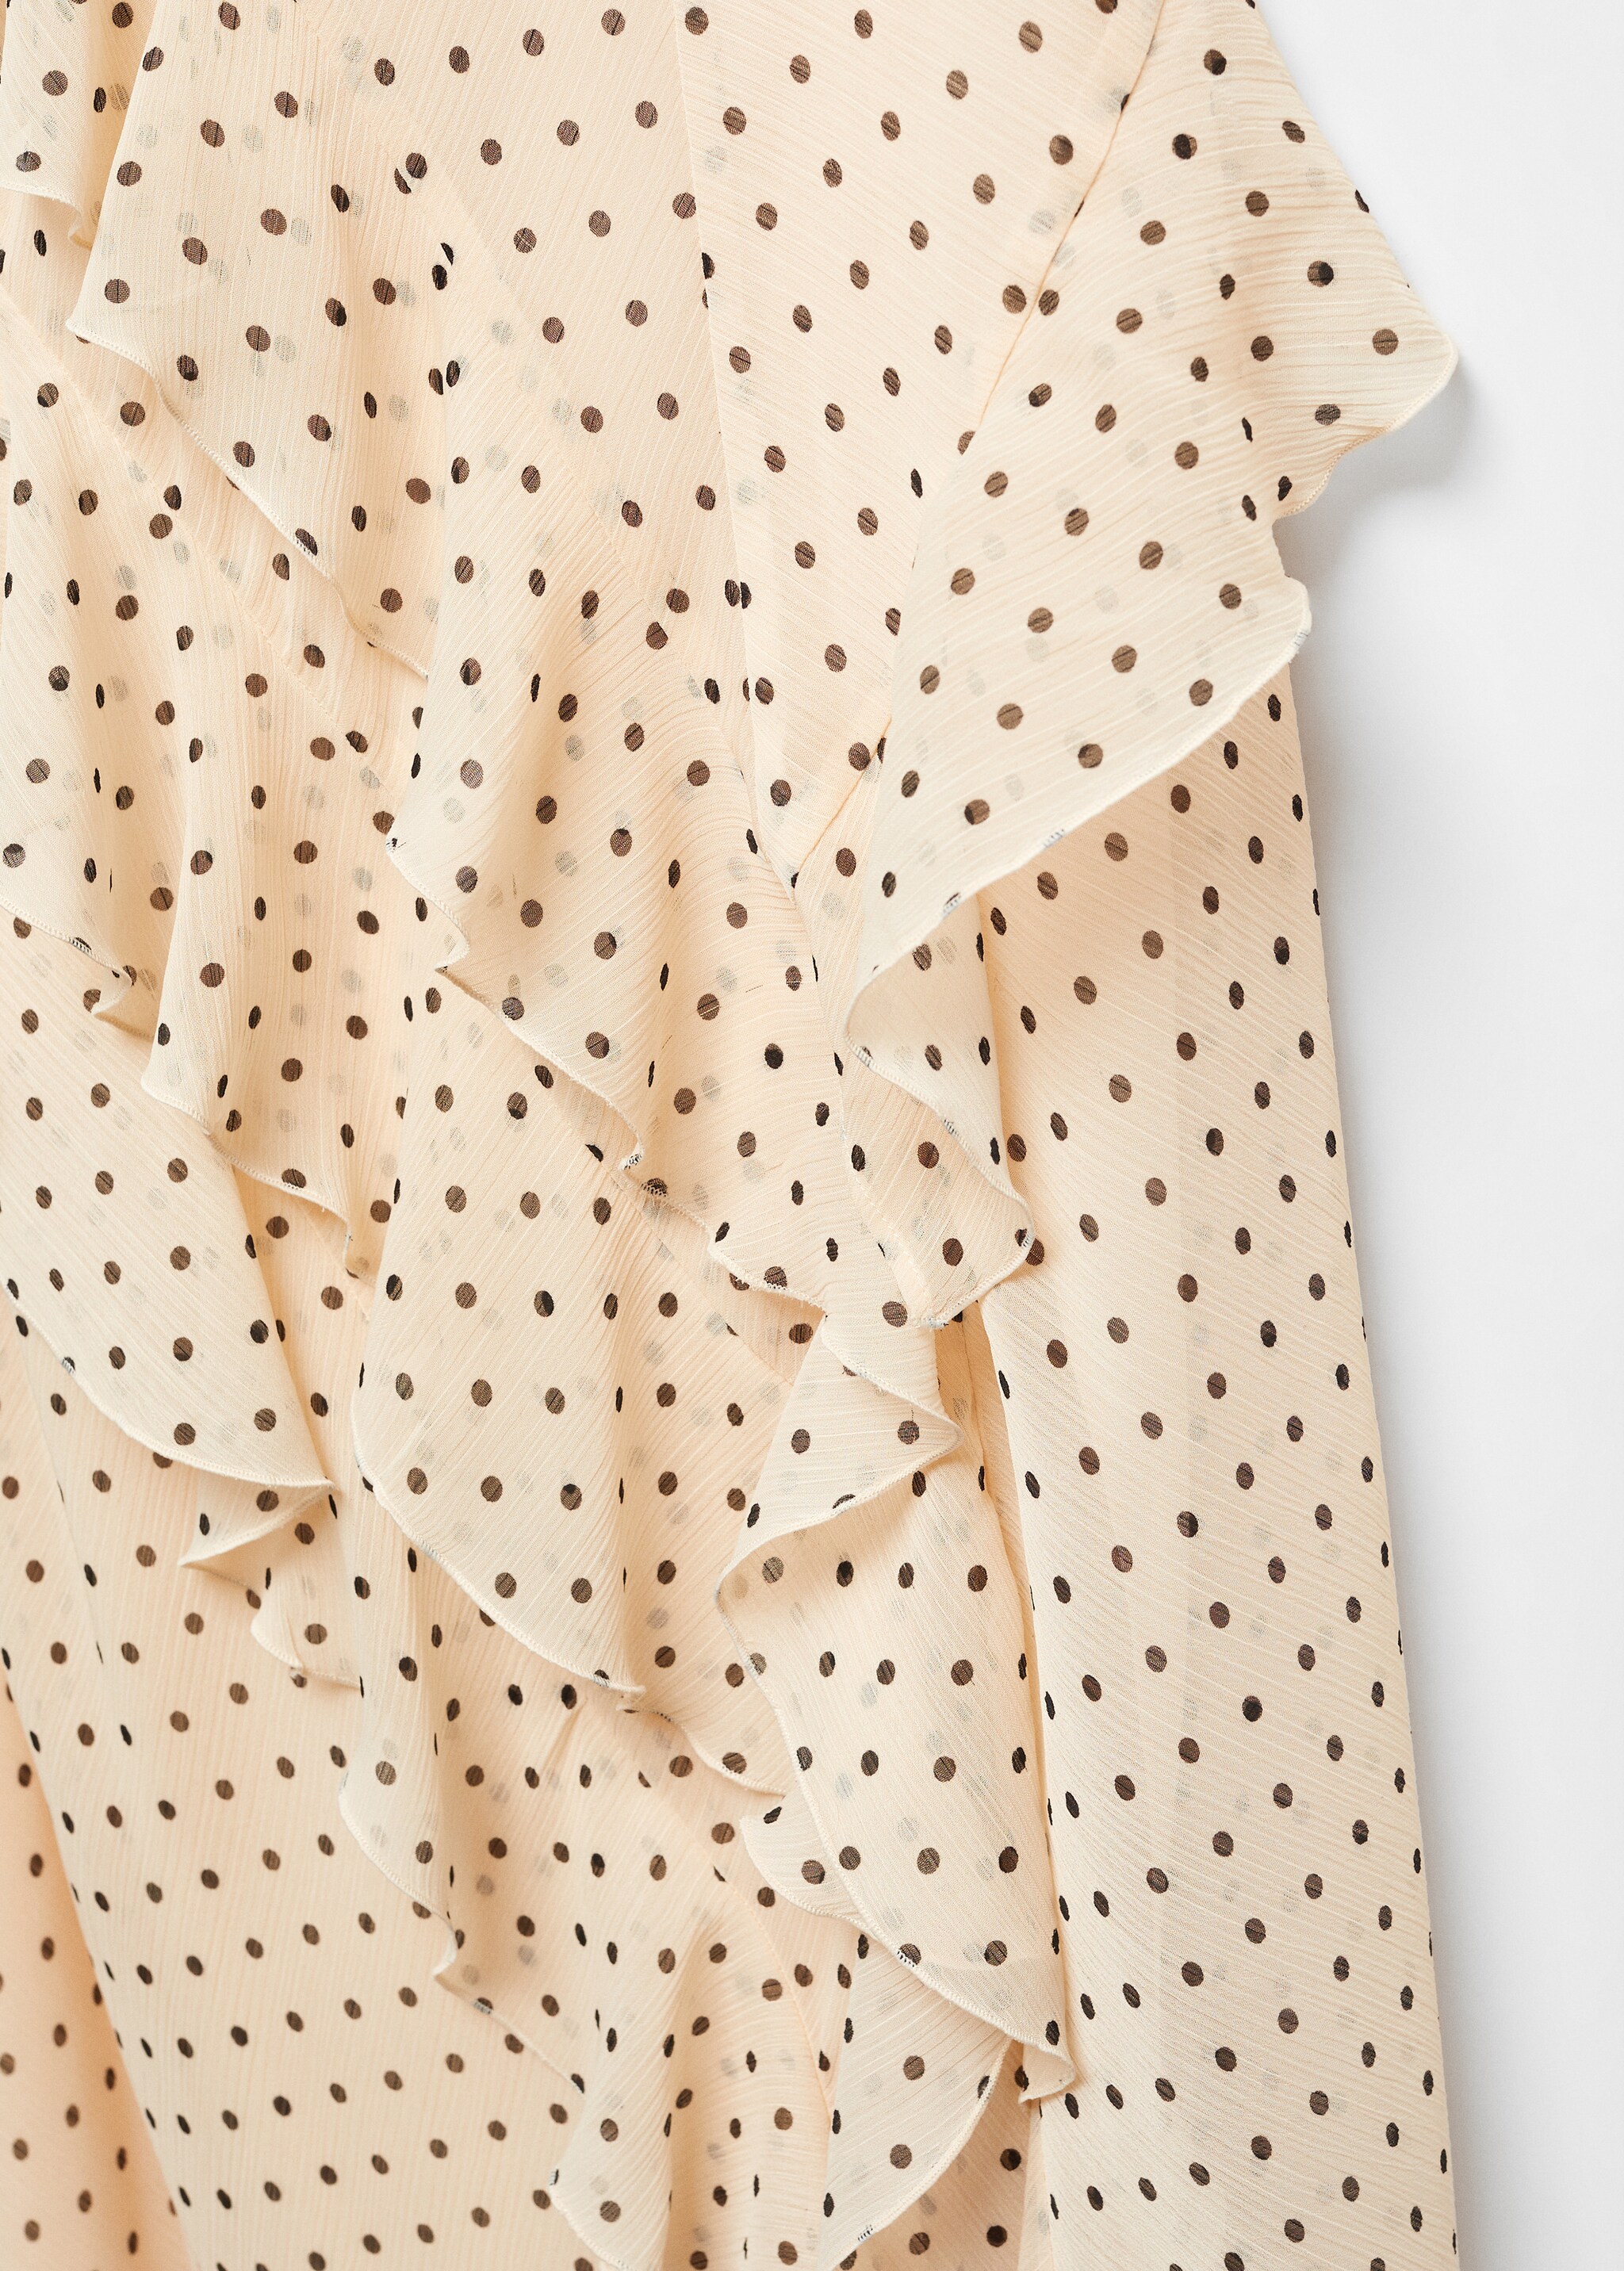 Polka-dot ruffled dress - Details of the article 8